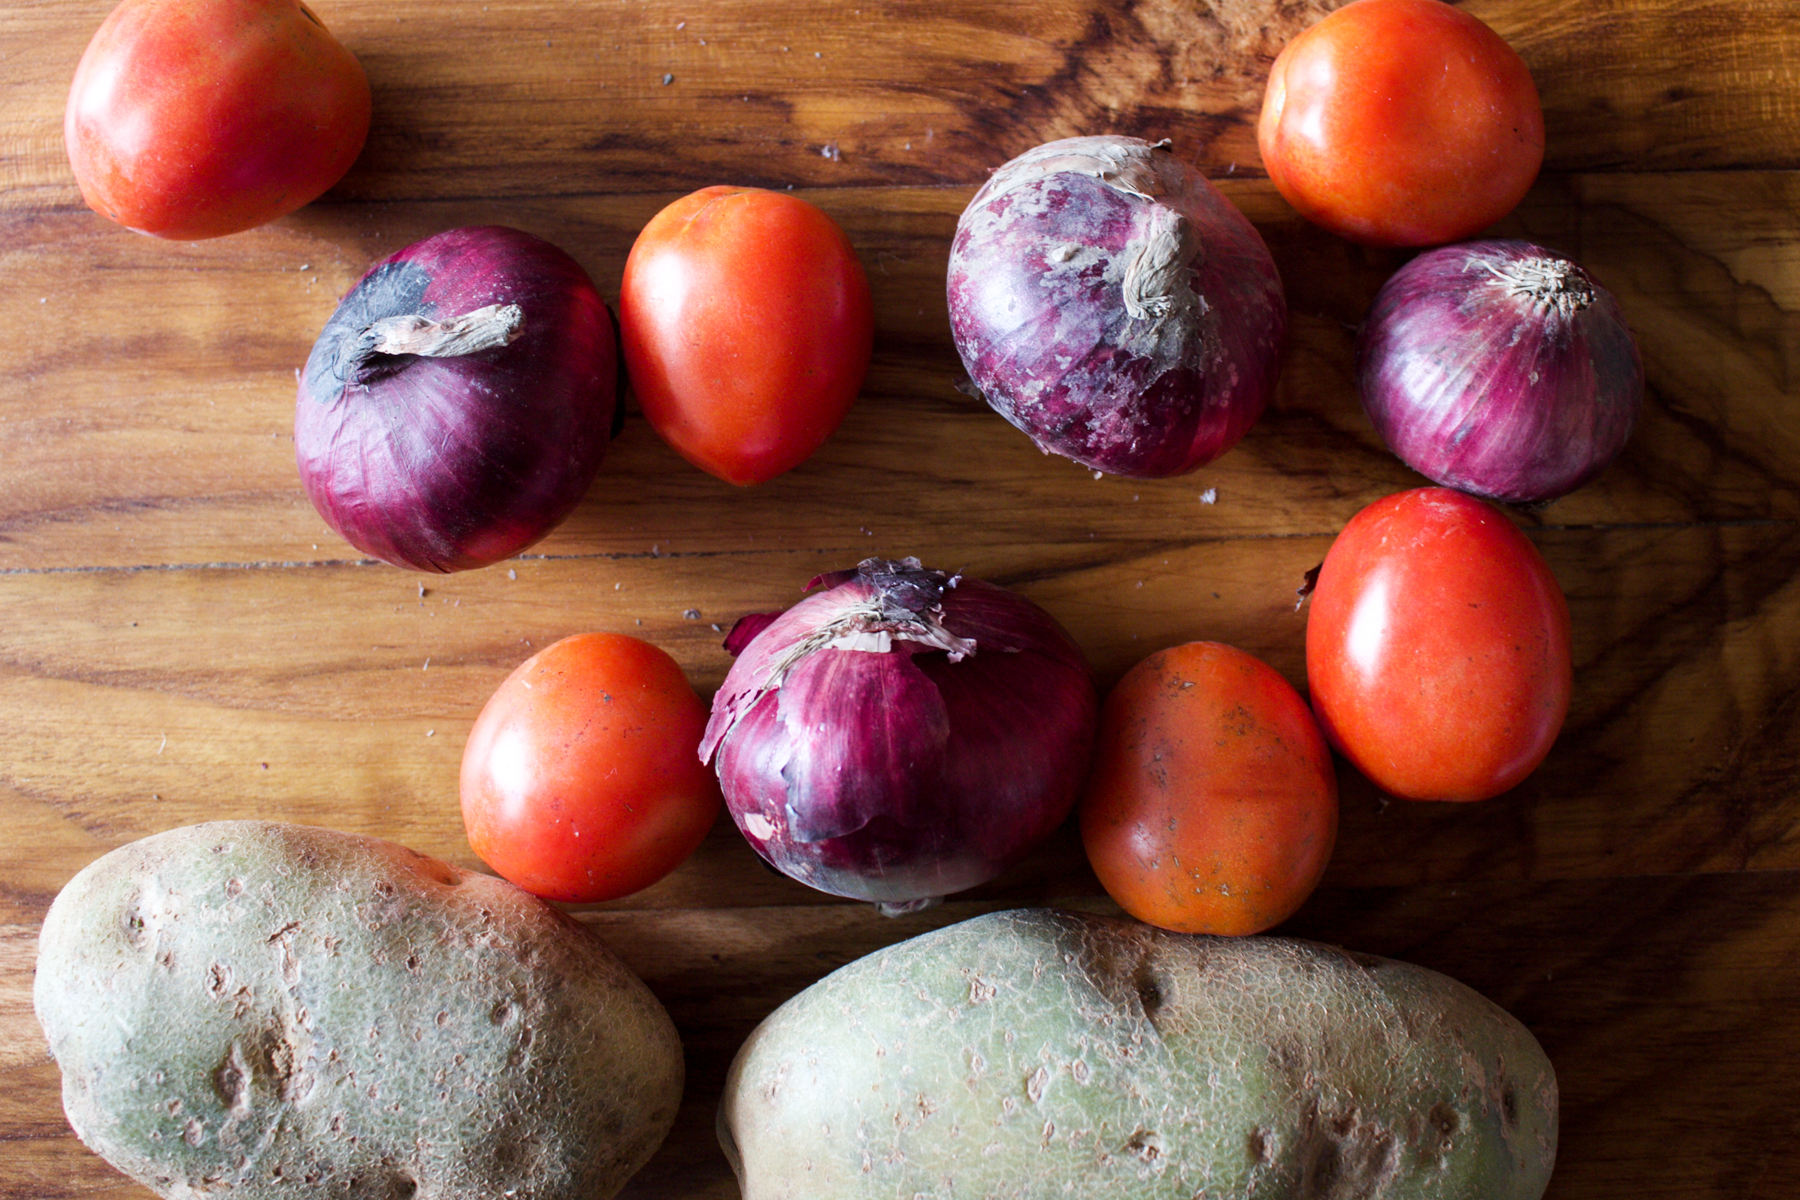 Aloo sabzi ingredients: potatoes, tomatoes and onions 